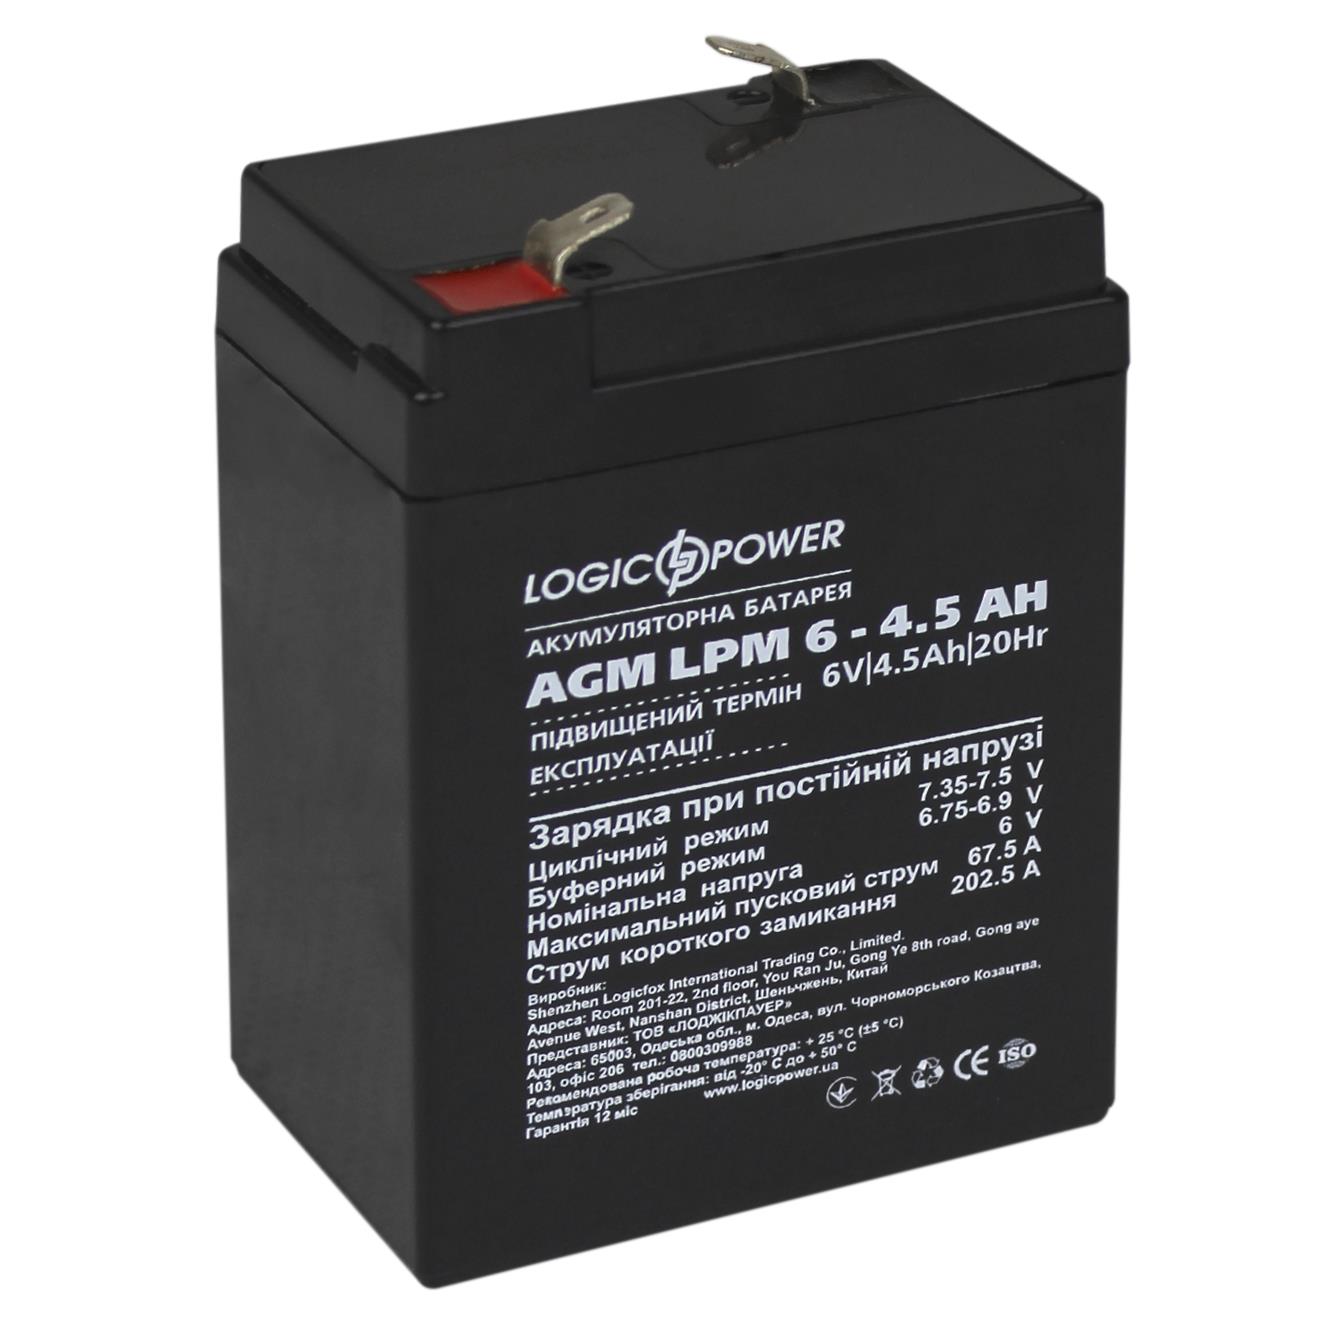 Аккумулятор свинцово-кислотный LogicPower AGM LPM 6V - 4.5 Ah (3860) цена 251.00 грн - фотография 2